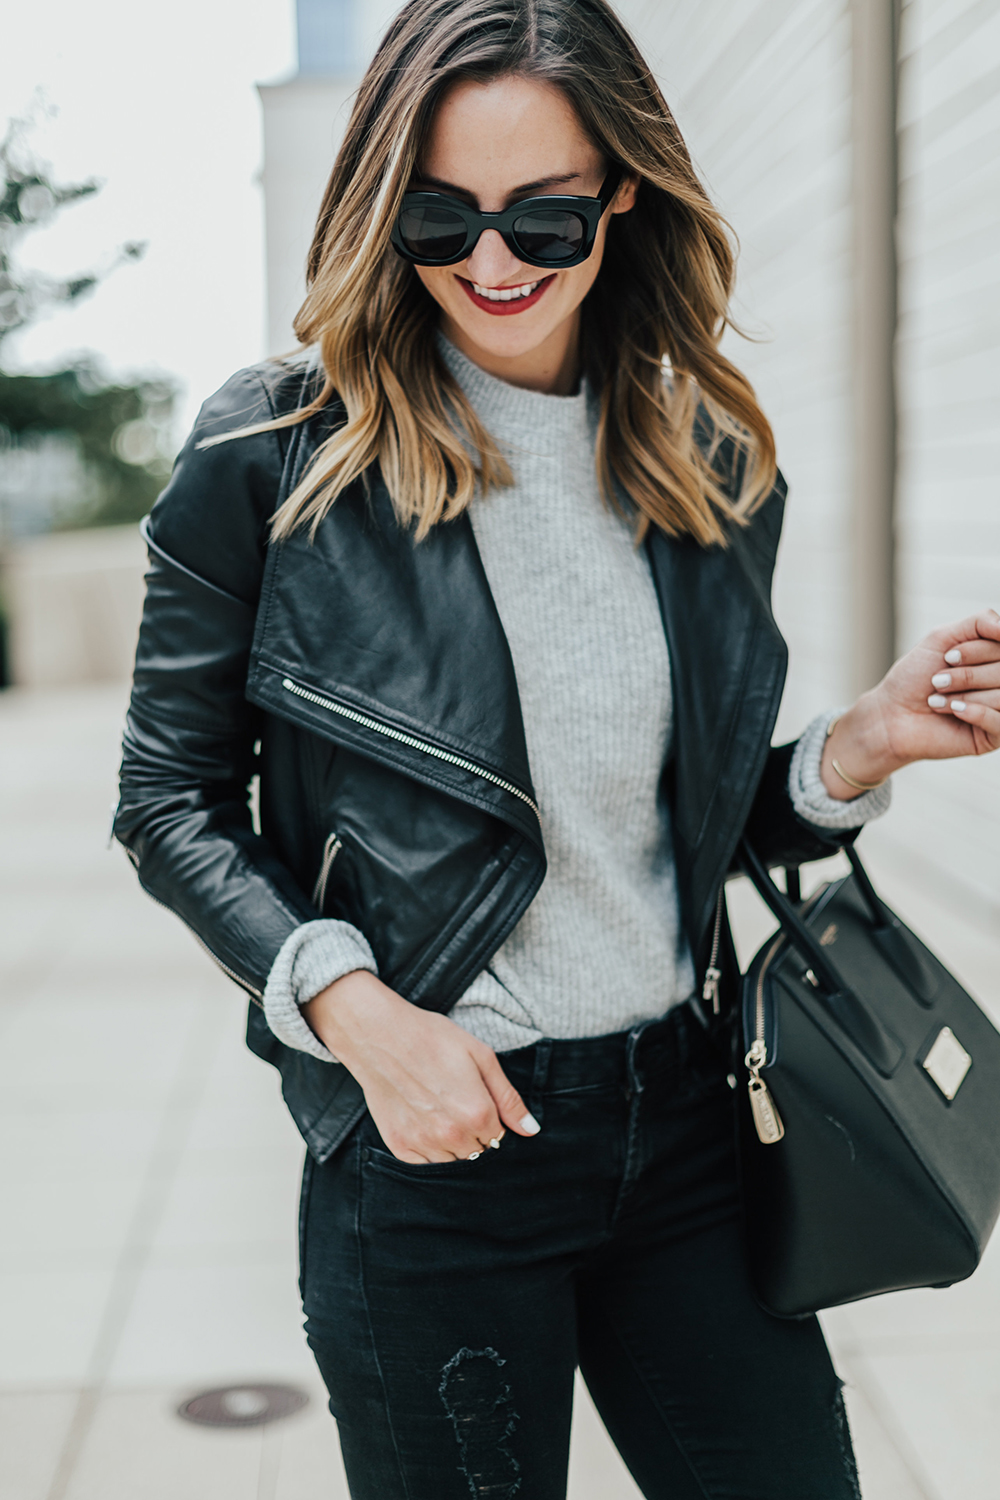 Grey & Black - LivvyLand | Austin Fashion and Style Blogger